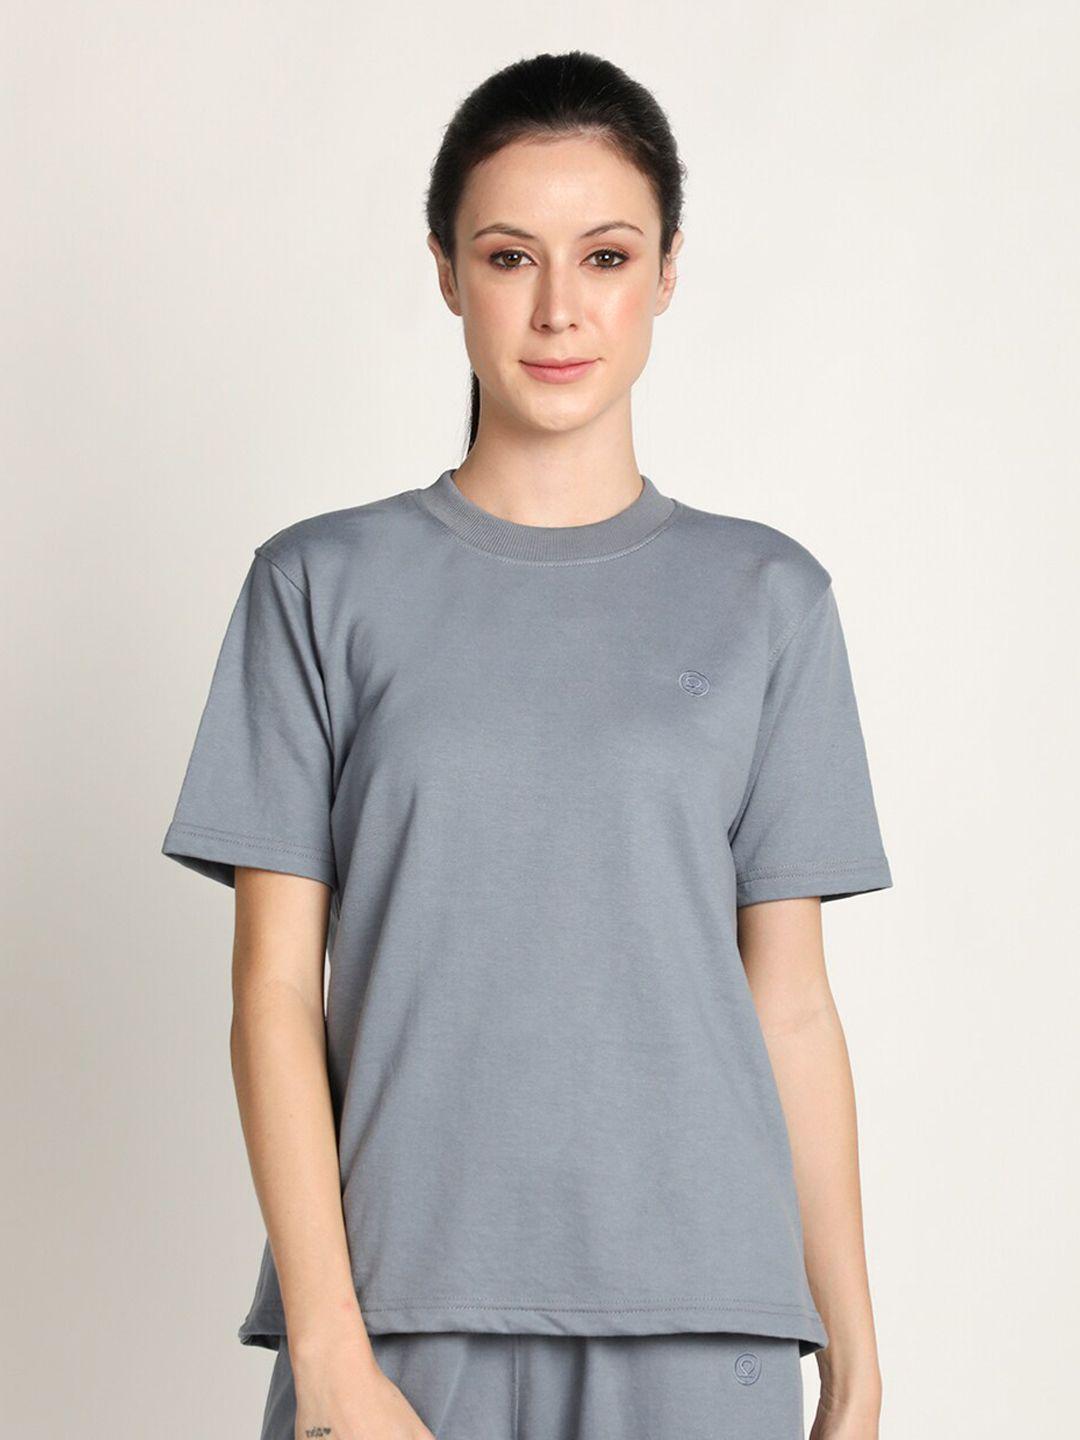 chkokko women grey outdoor t-shirt